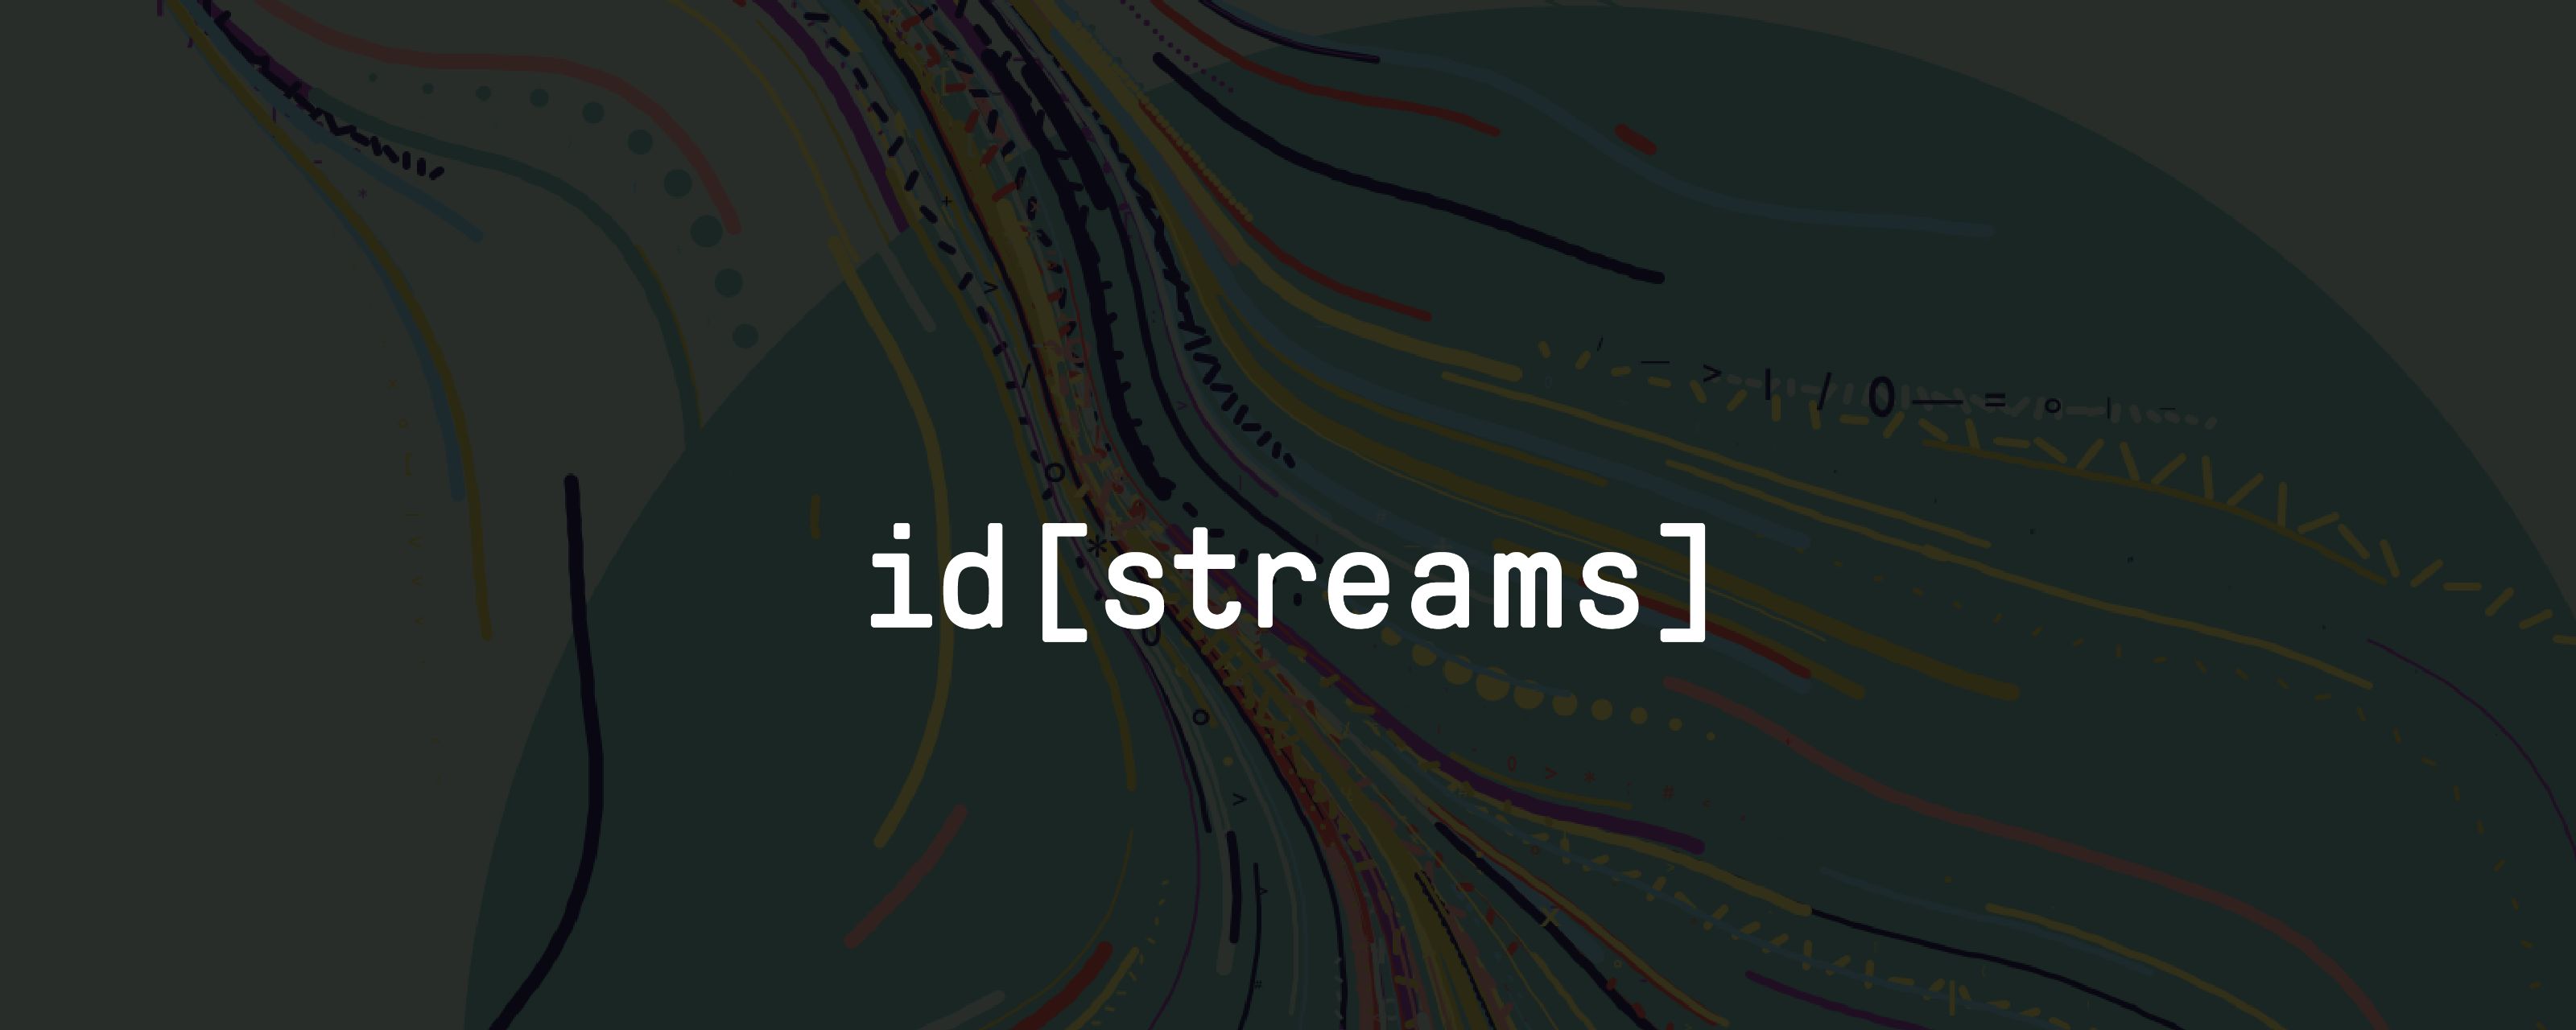 id[streams] Title Image